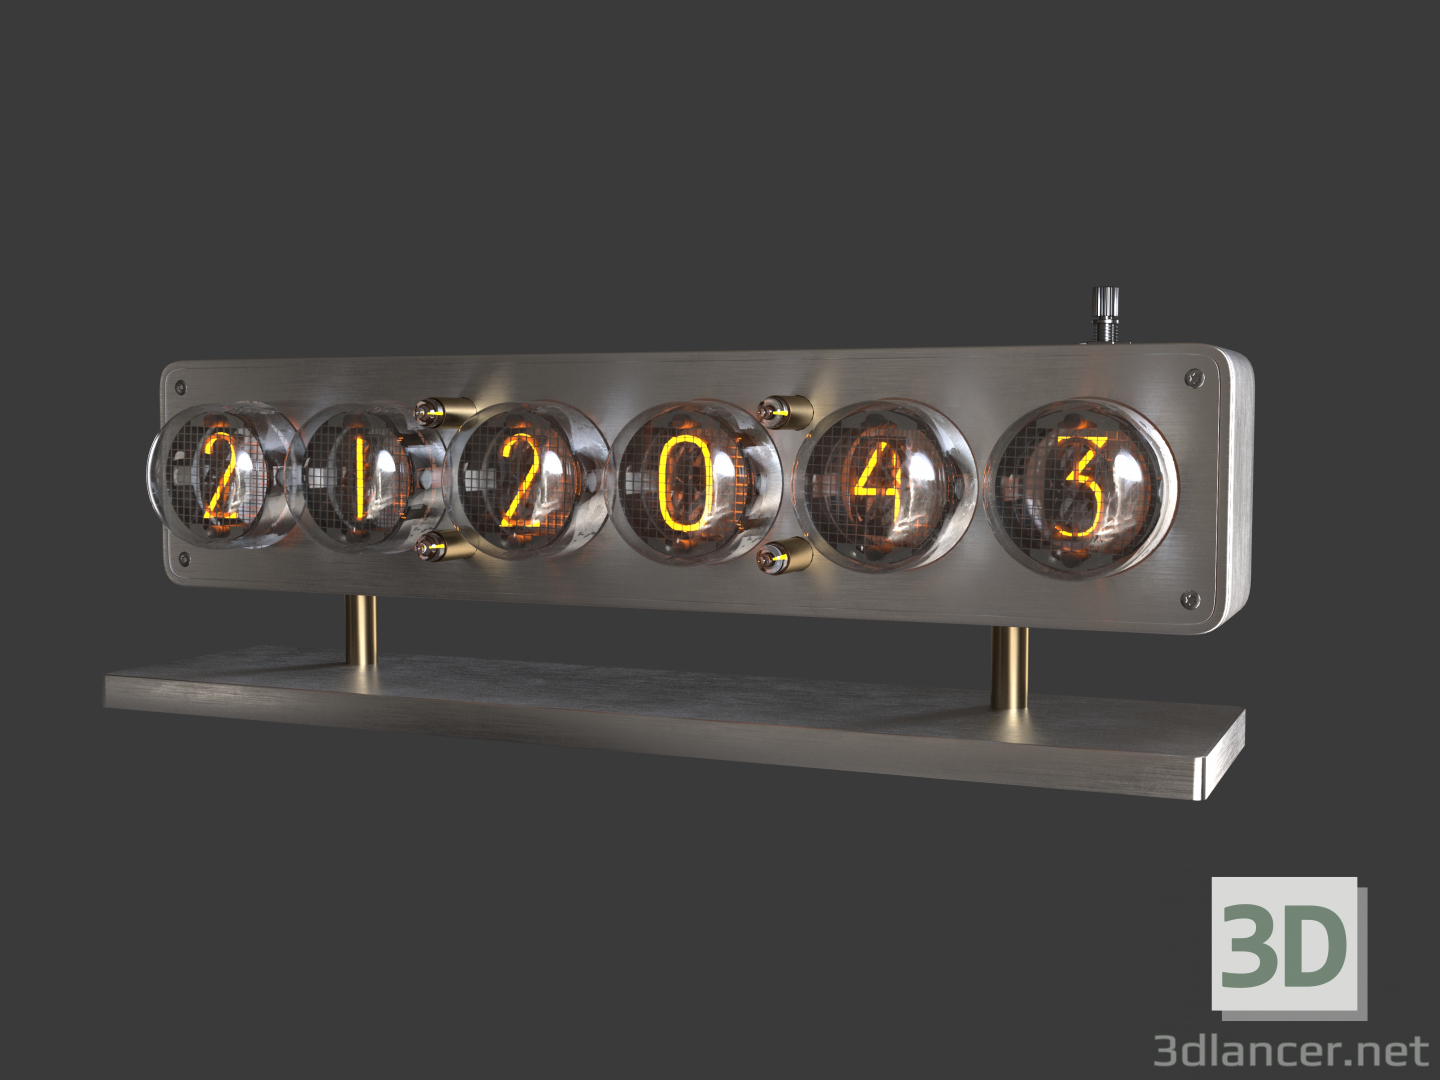 3d Clock on lamps IN-4.IN4 Glow Tube Nixie Electron Tube Clock model buy - render